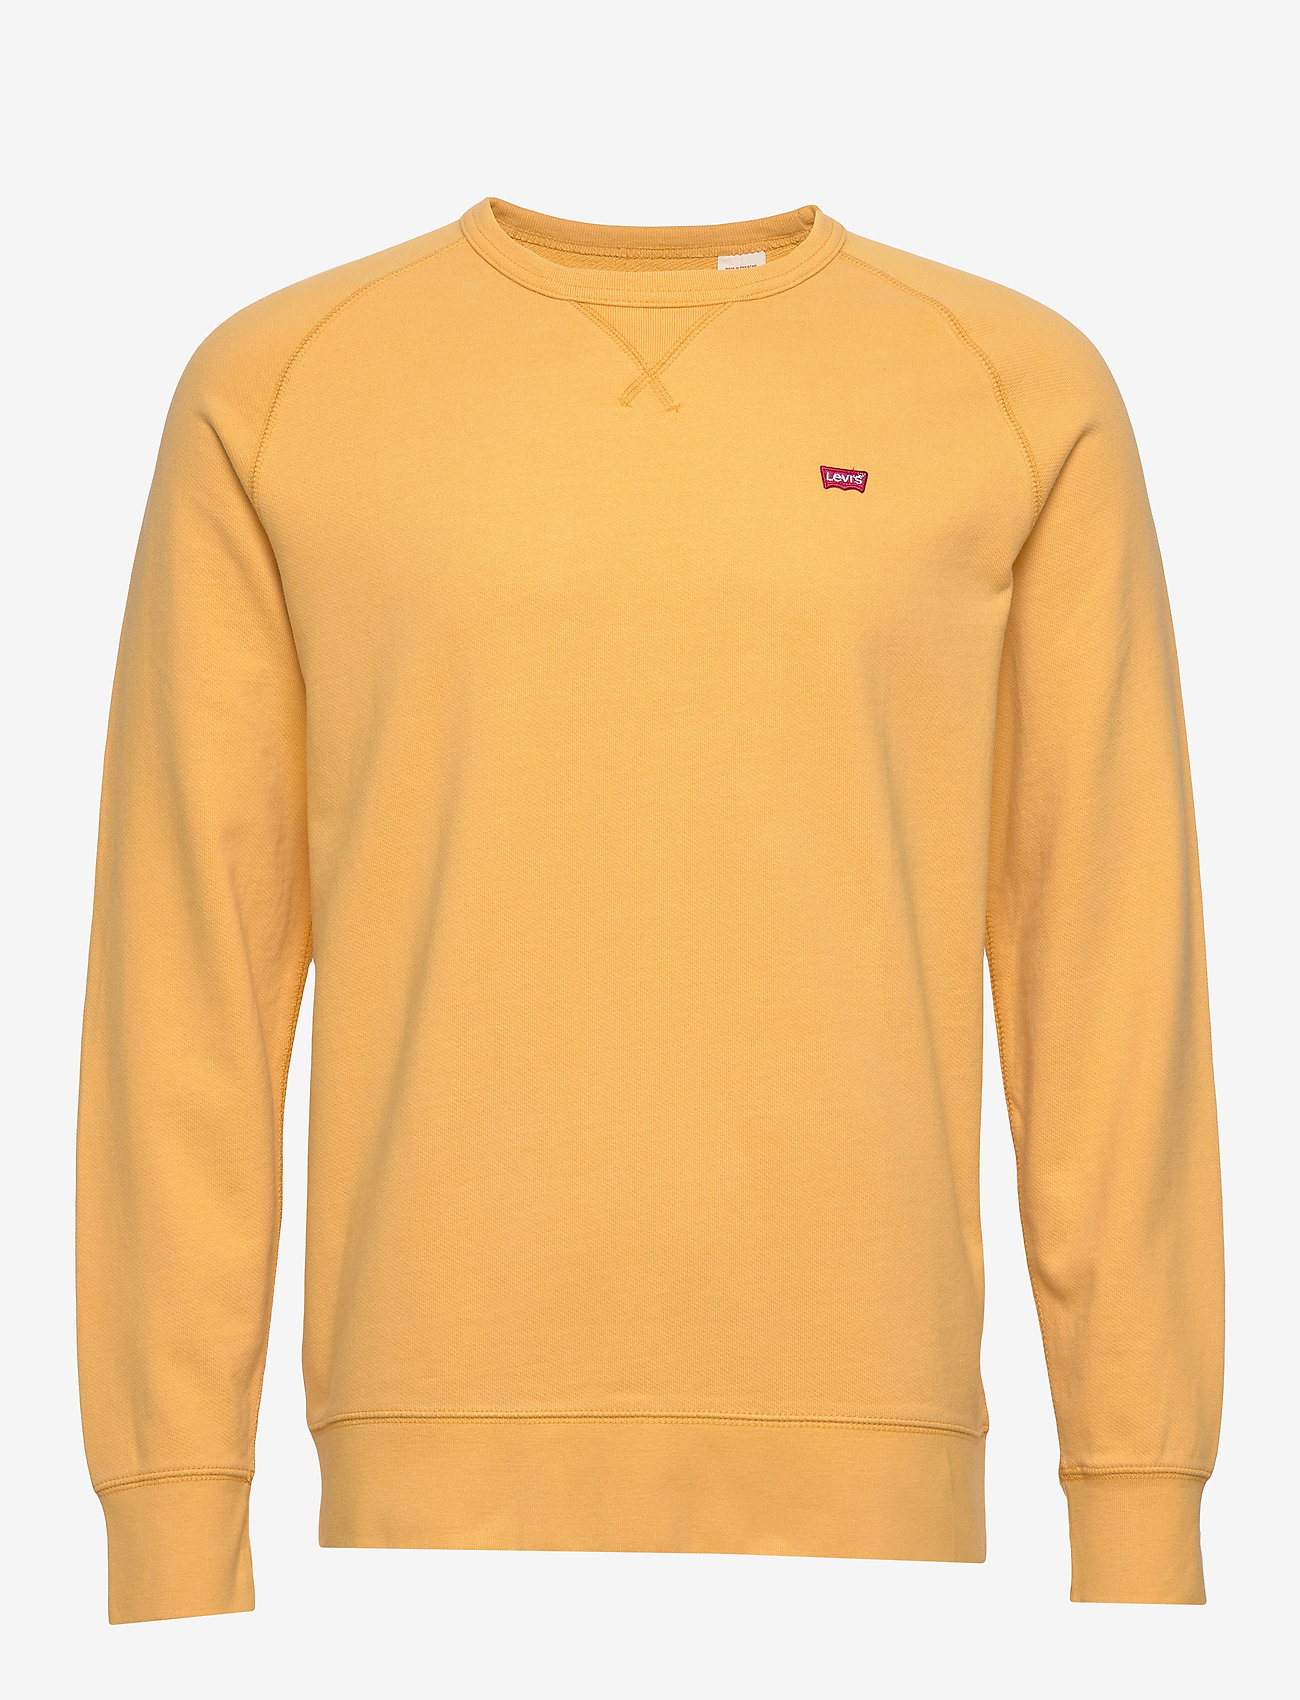 levis yellow sweater